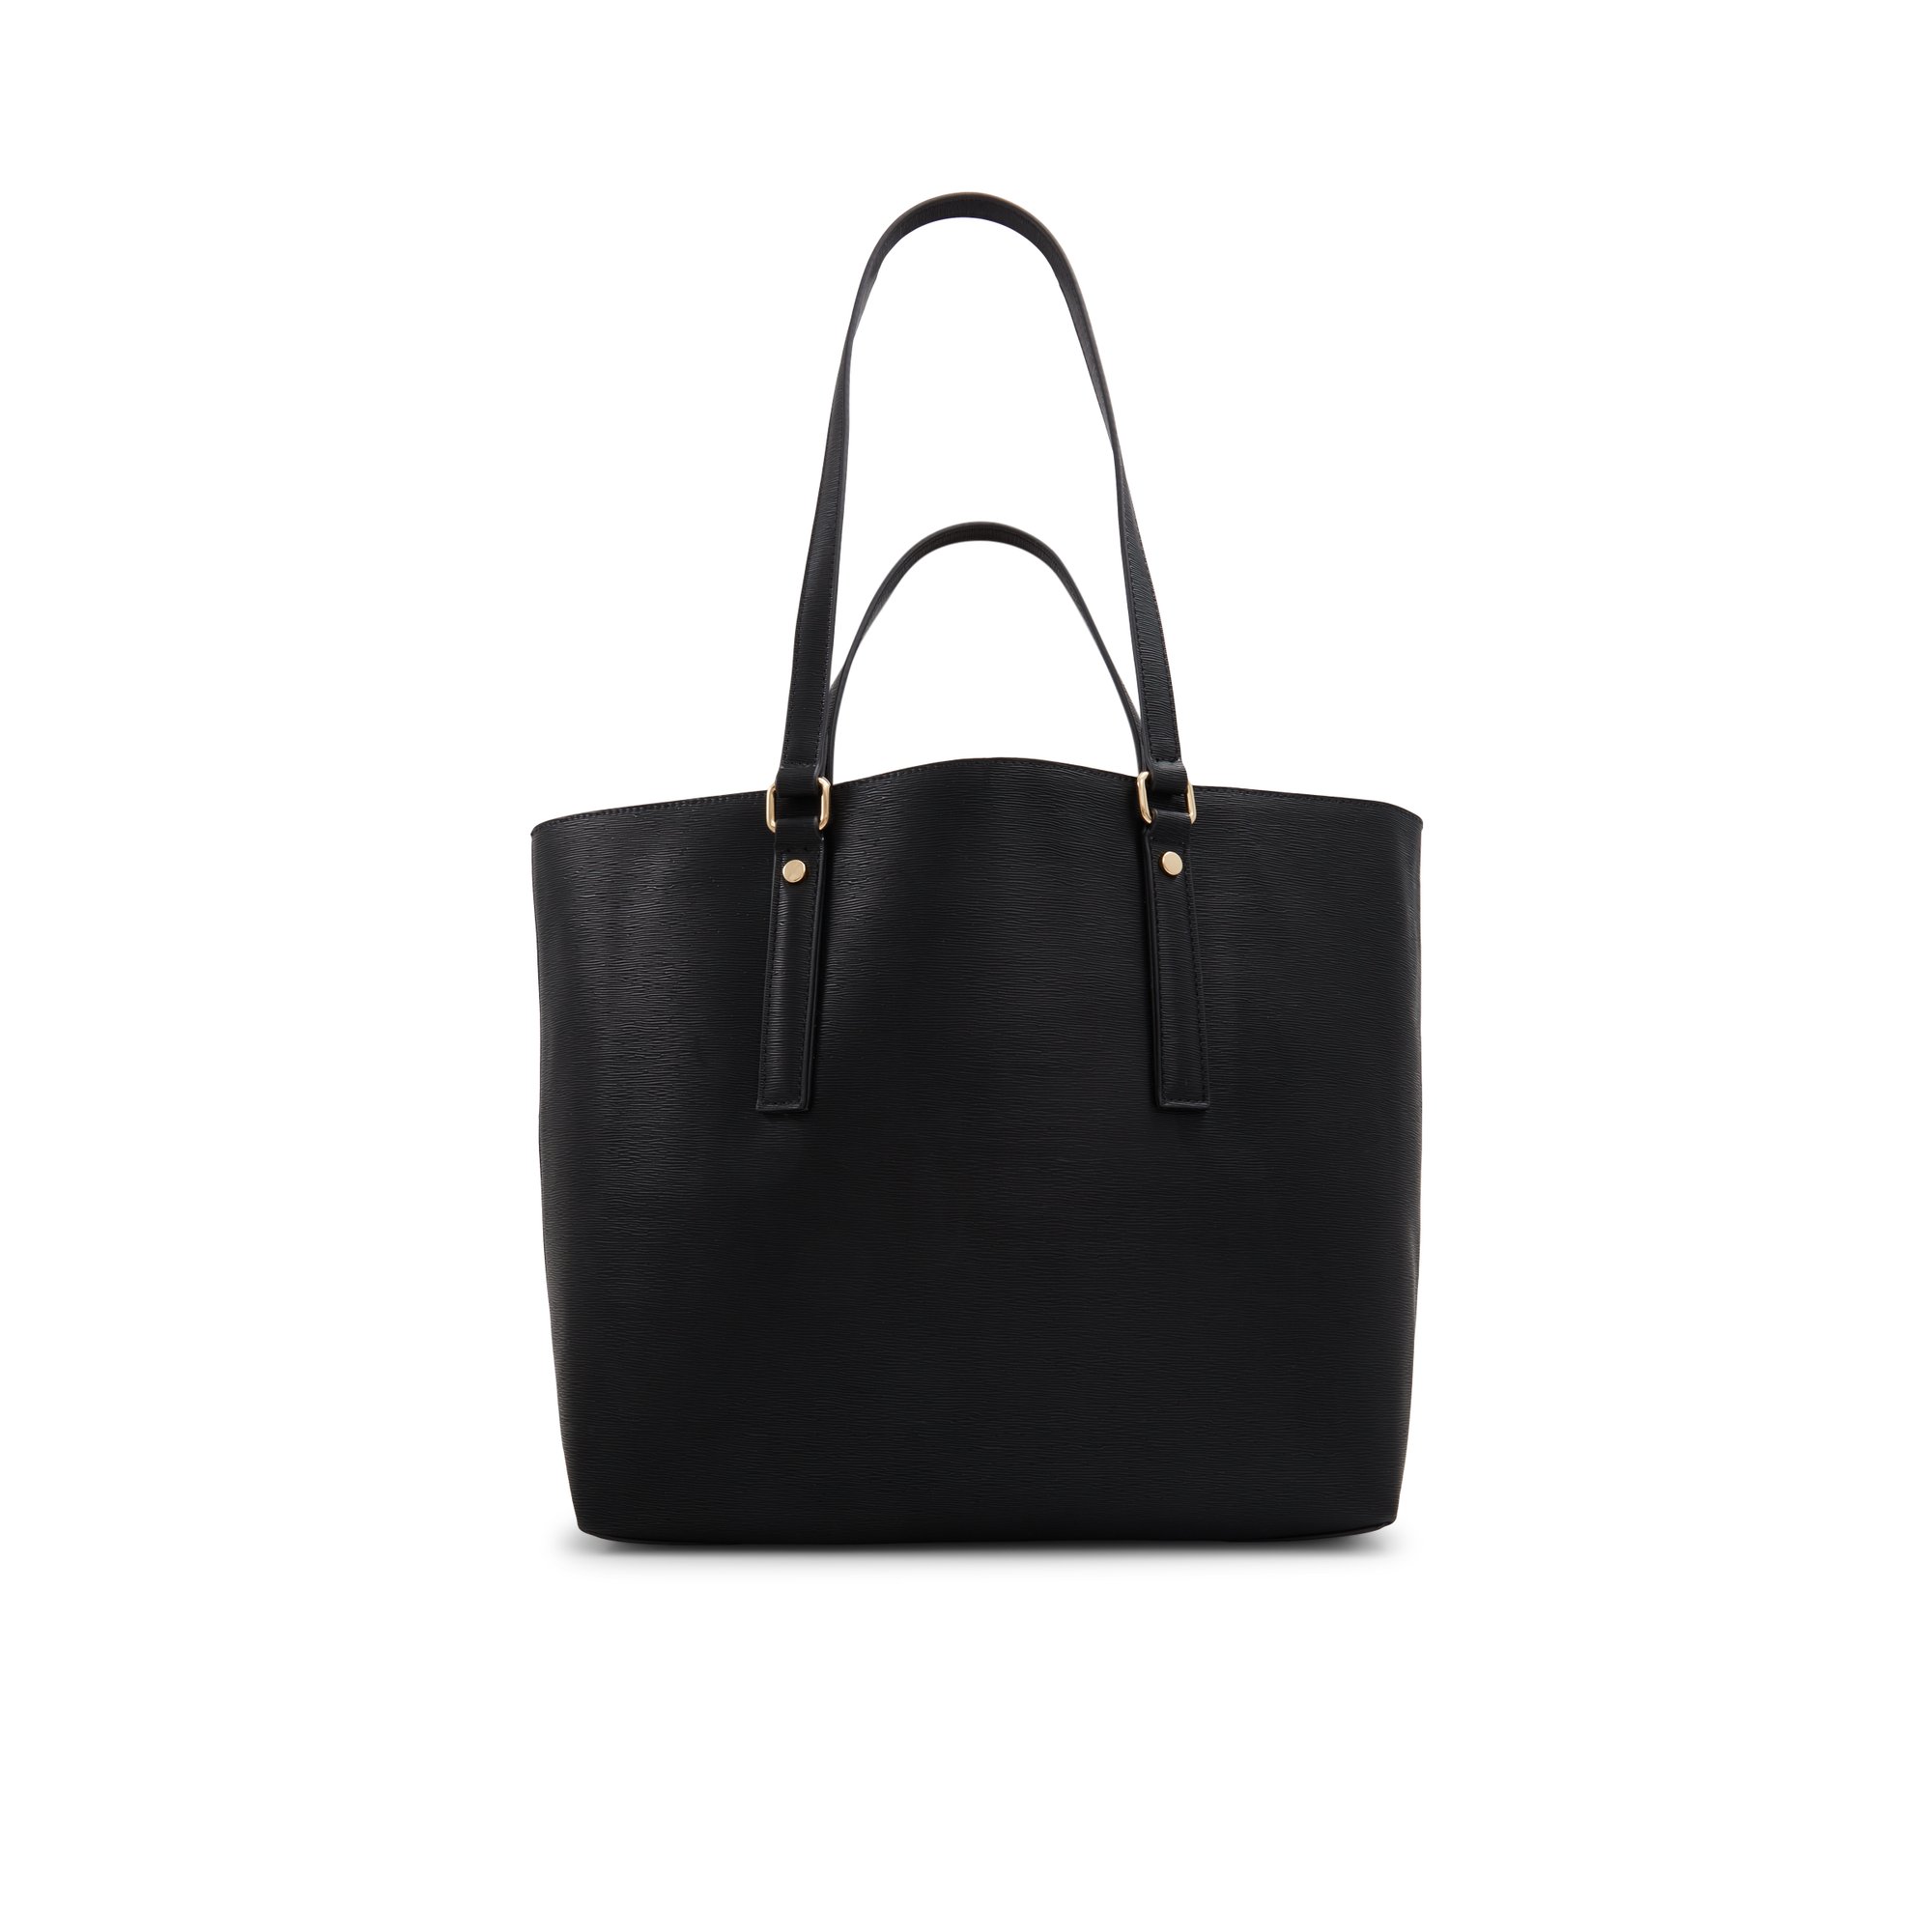 ALDO Cibriannx - Women's Tote Handbag - Black